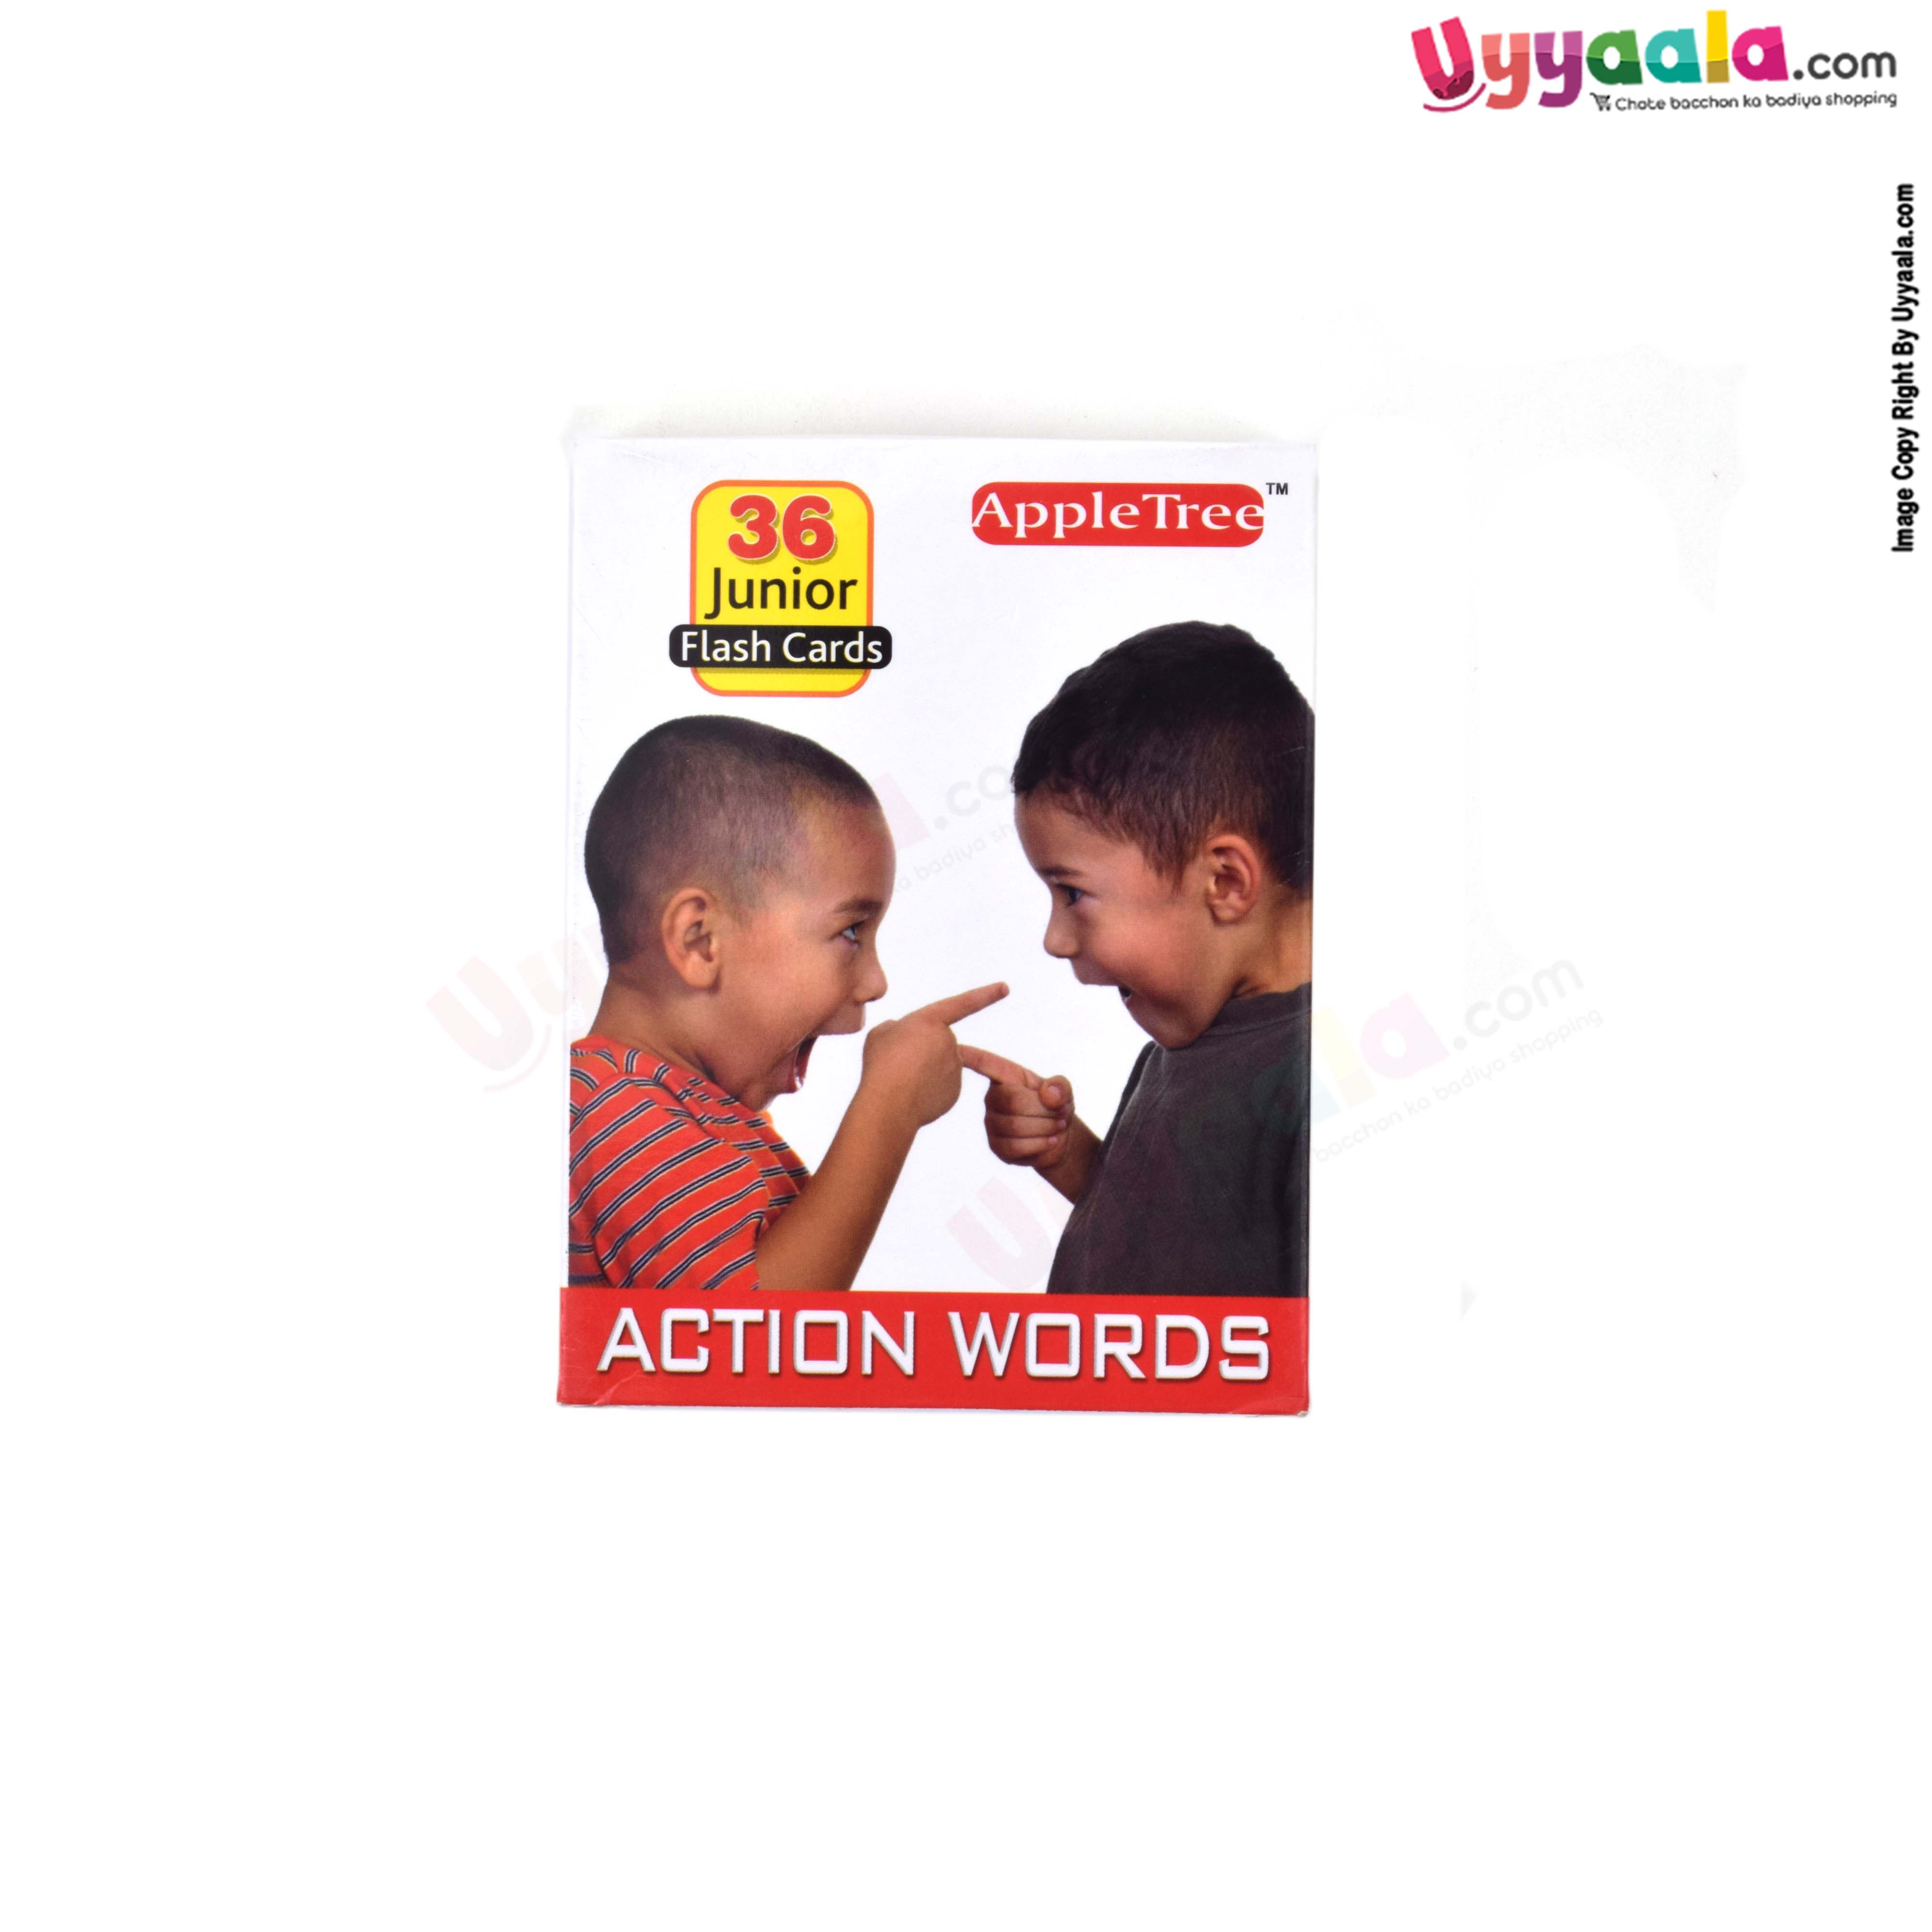 Apple Tree junior flash cards action words - 36 Pcs